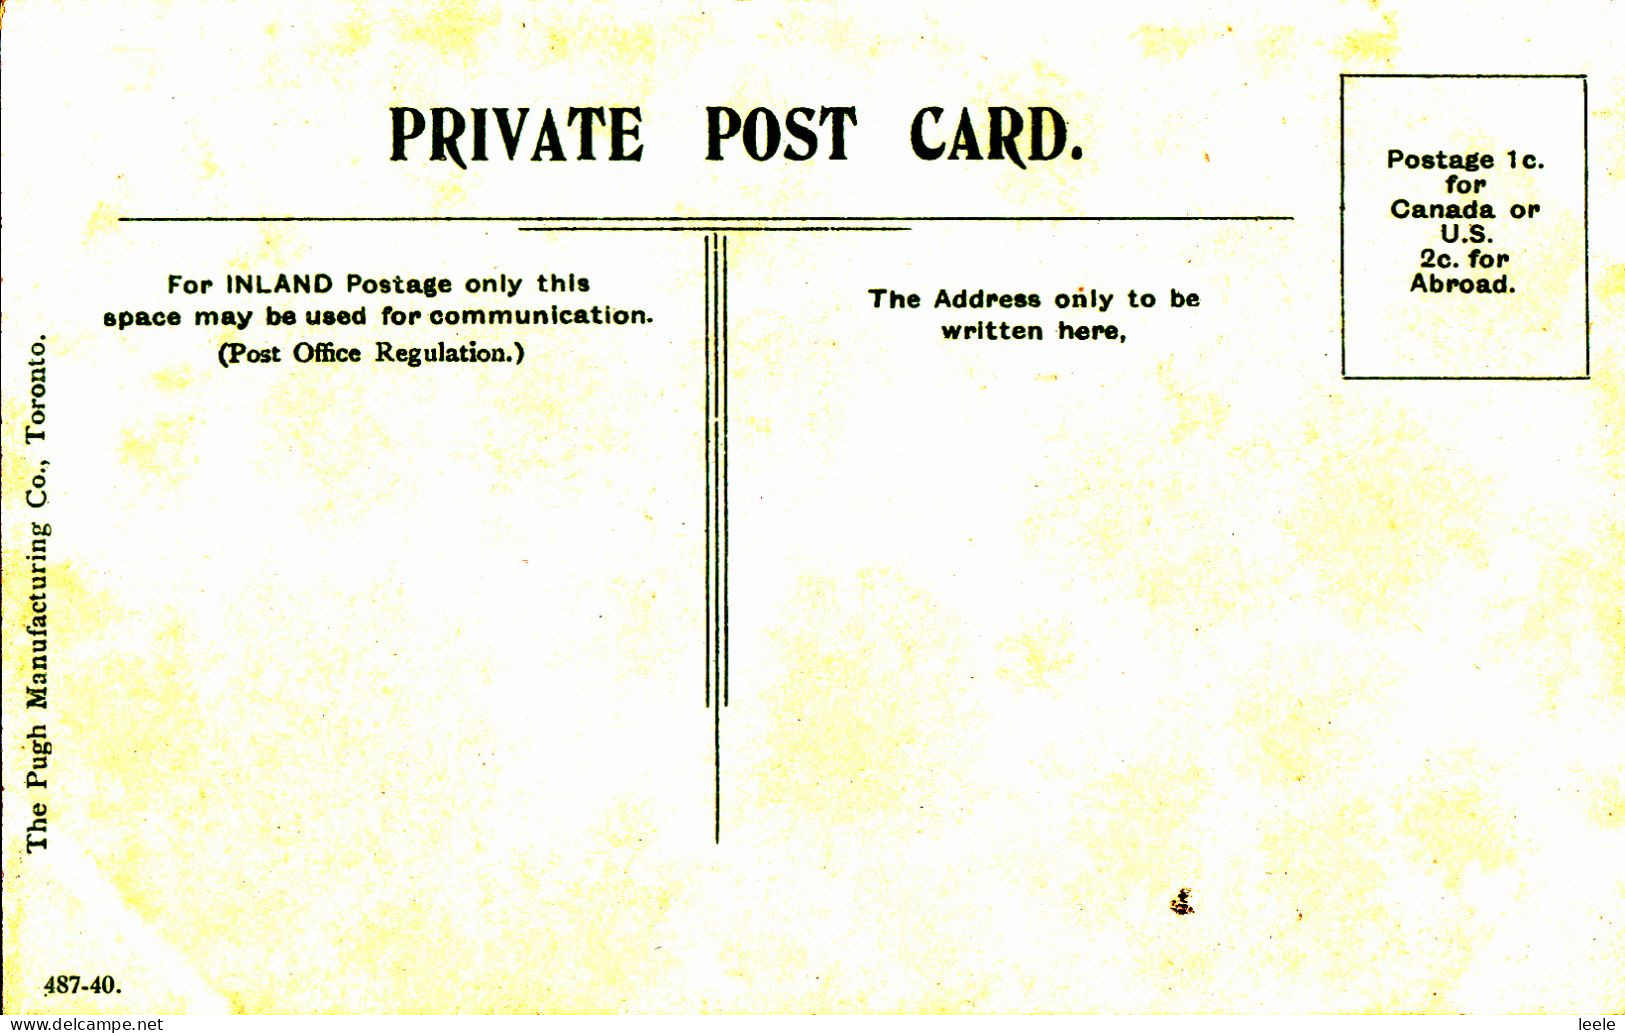 BV19. Private Postcard. The Market, Hamilton, Ontario, Canada - Hamilton